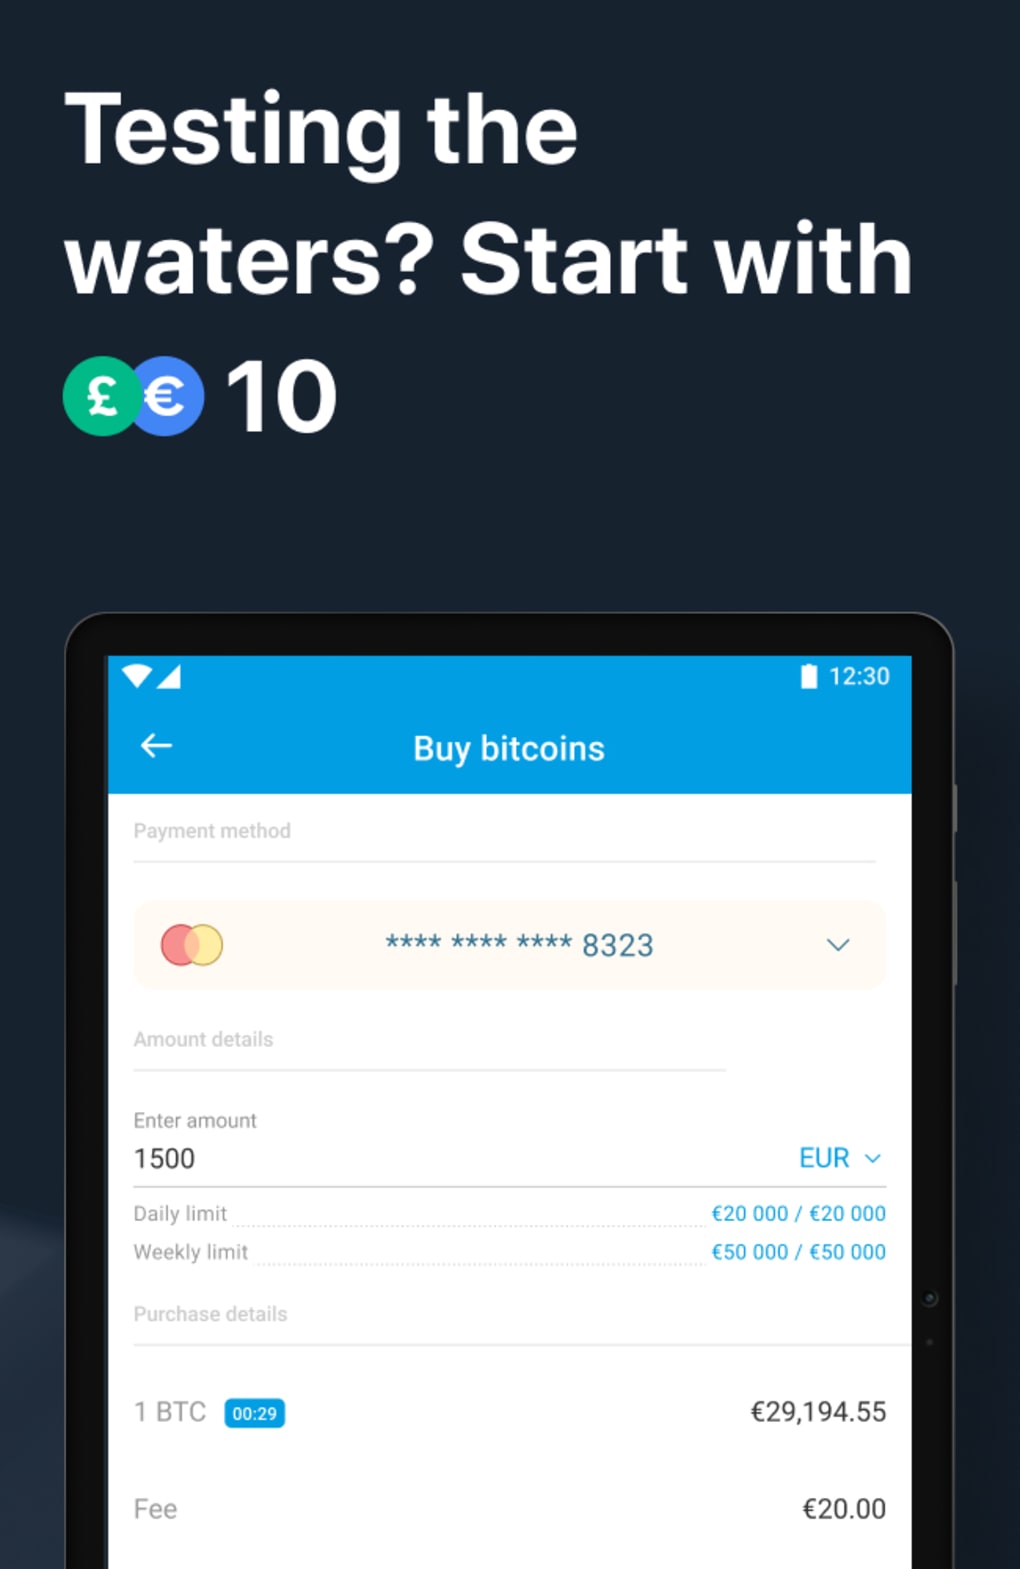 ‎App Store: Cryptopay: Buy Bitcoin Safely